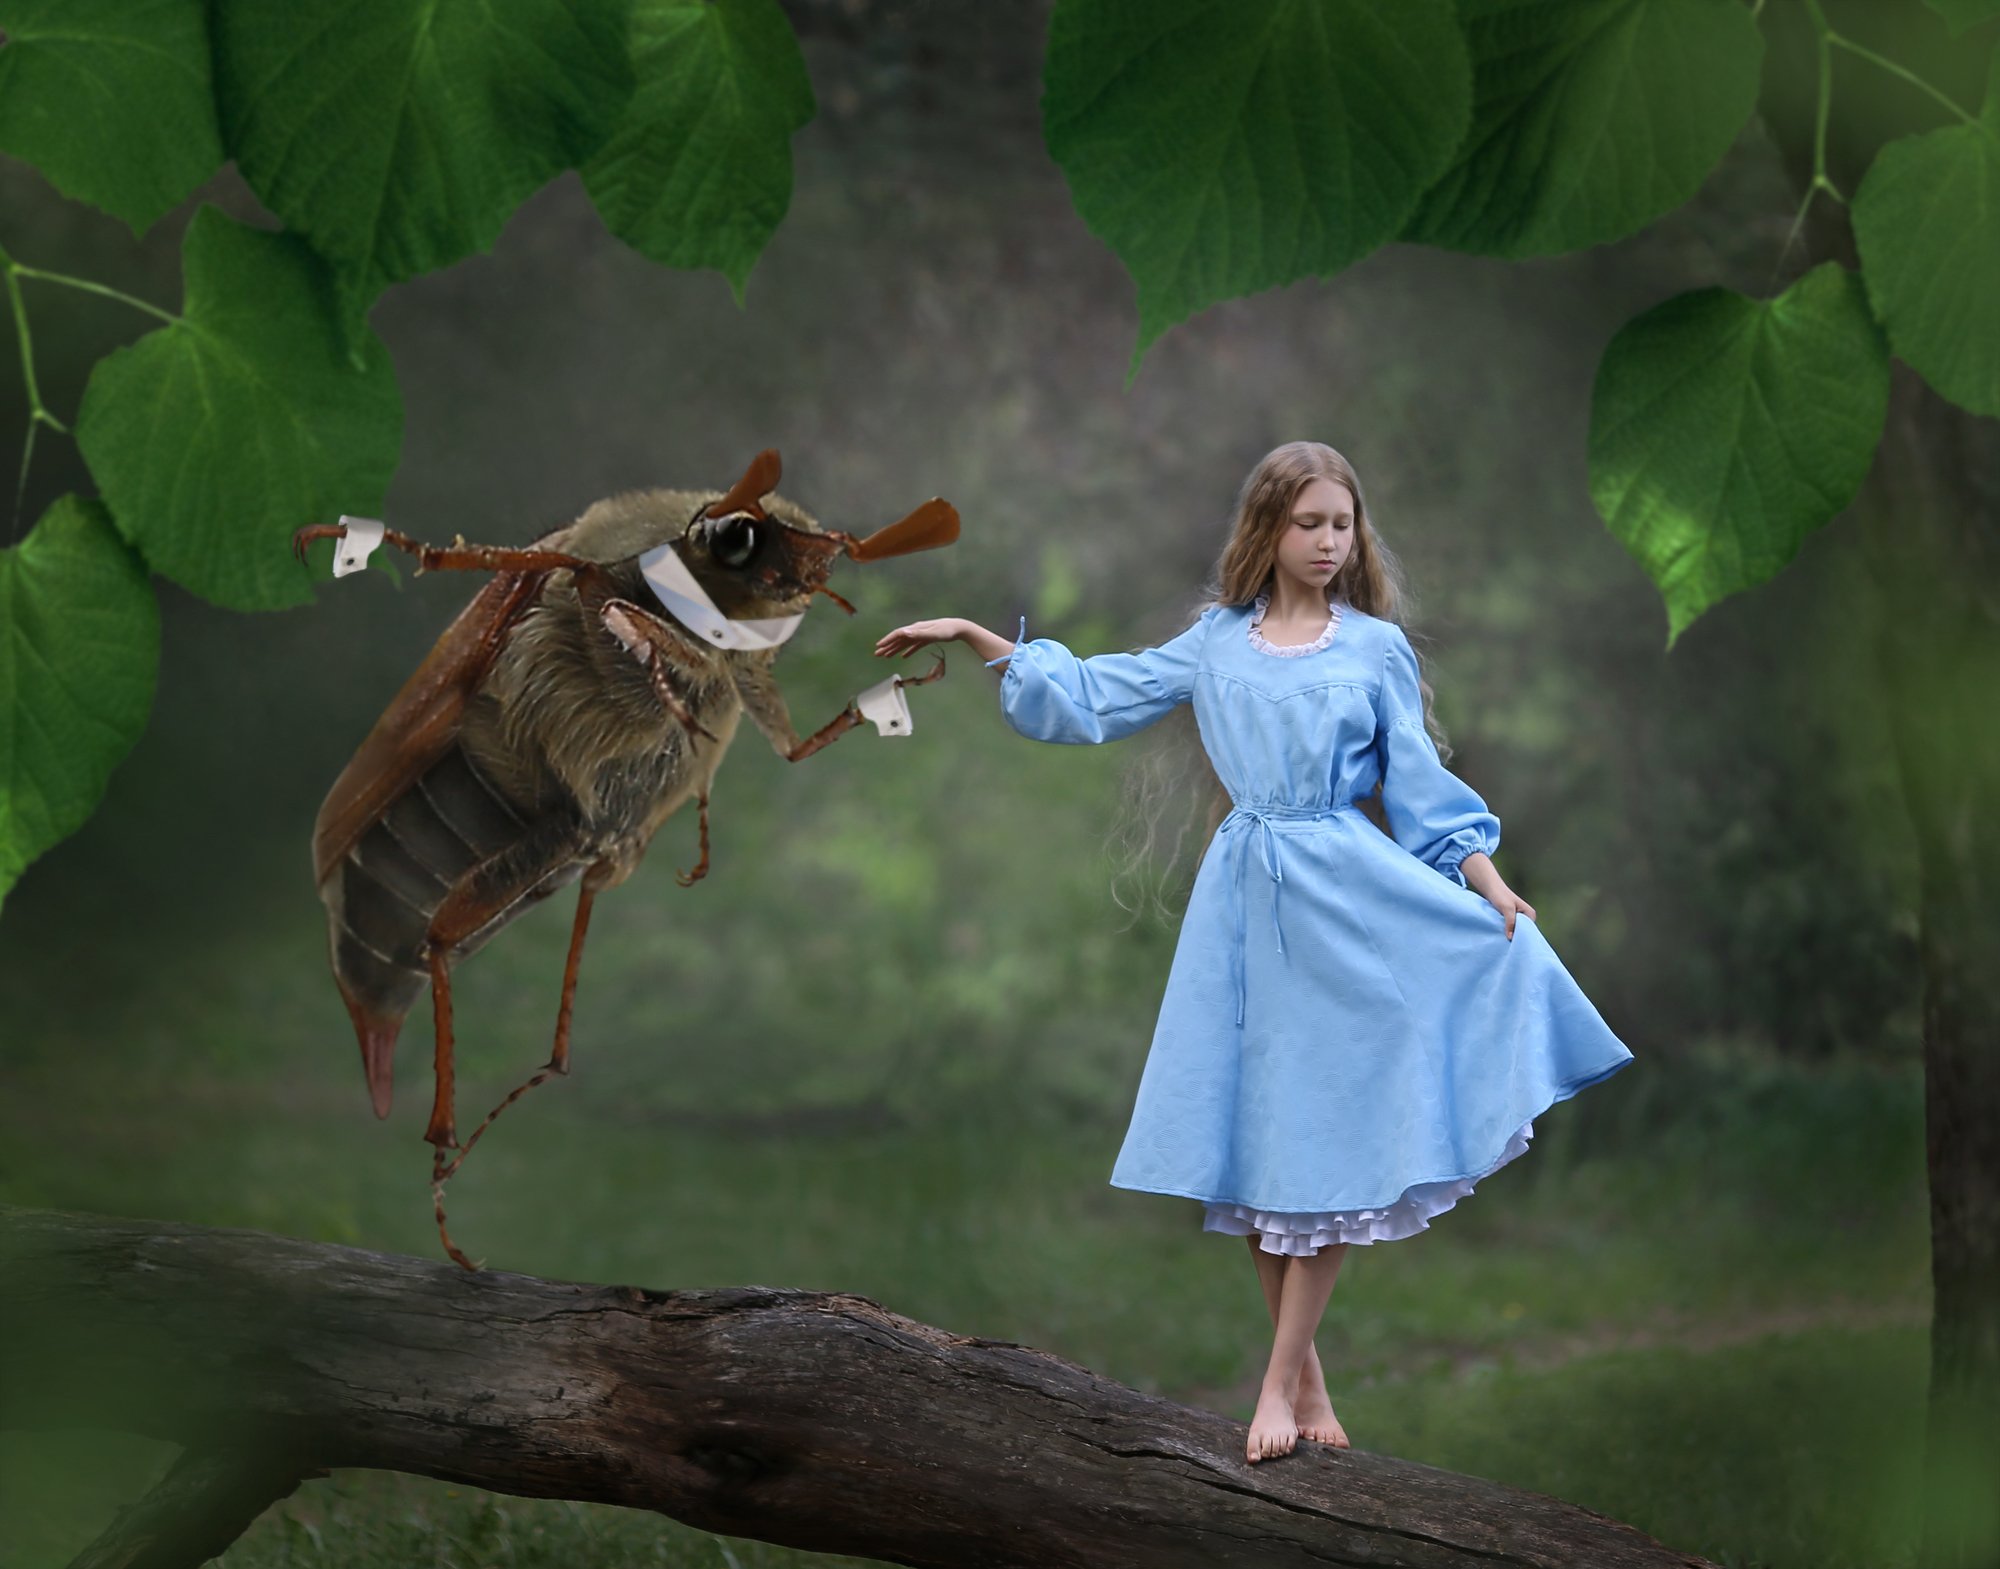 дюймовочка, девочка с жуком, inch, сказка, сказочное фото, Ирина Голубятникова